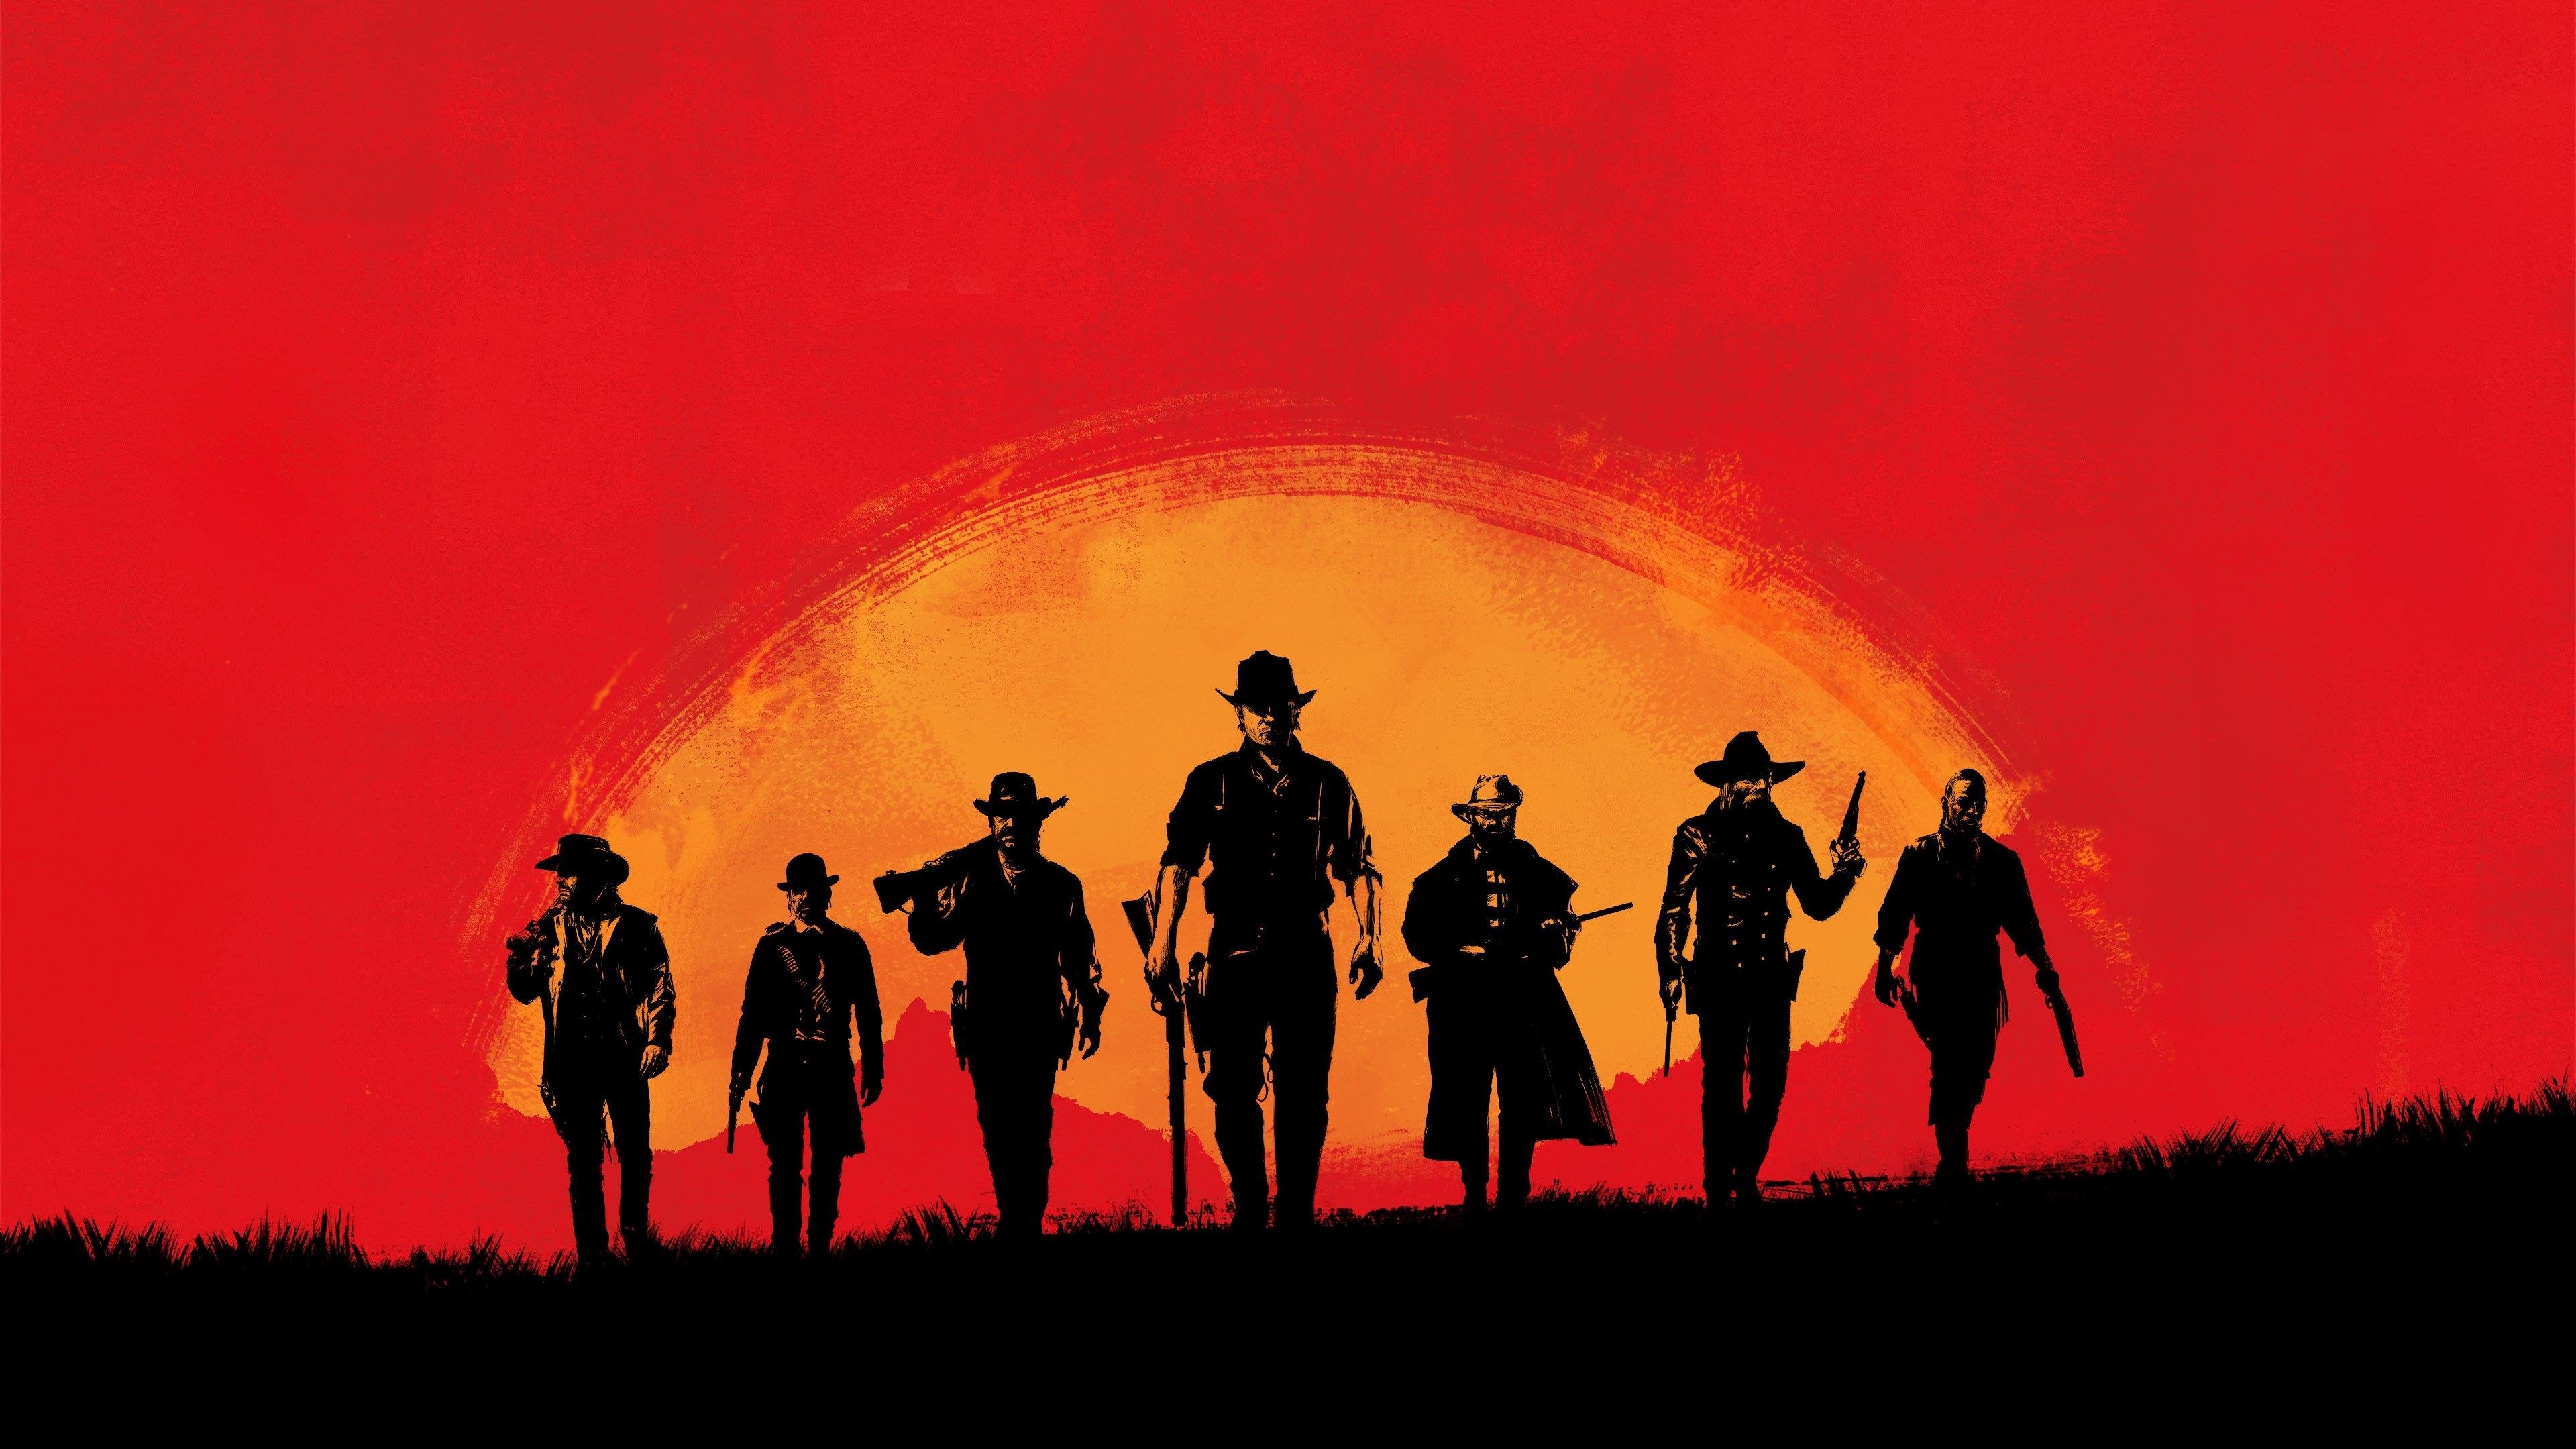 Рдр длс. РДР 2. Red Dead Redemption 2 poster. Red Redemption 2. Red Dead Redemption 2 Постер.